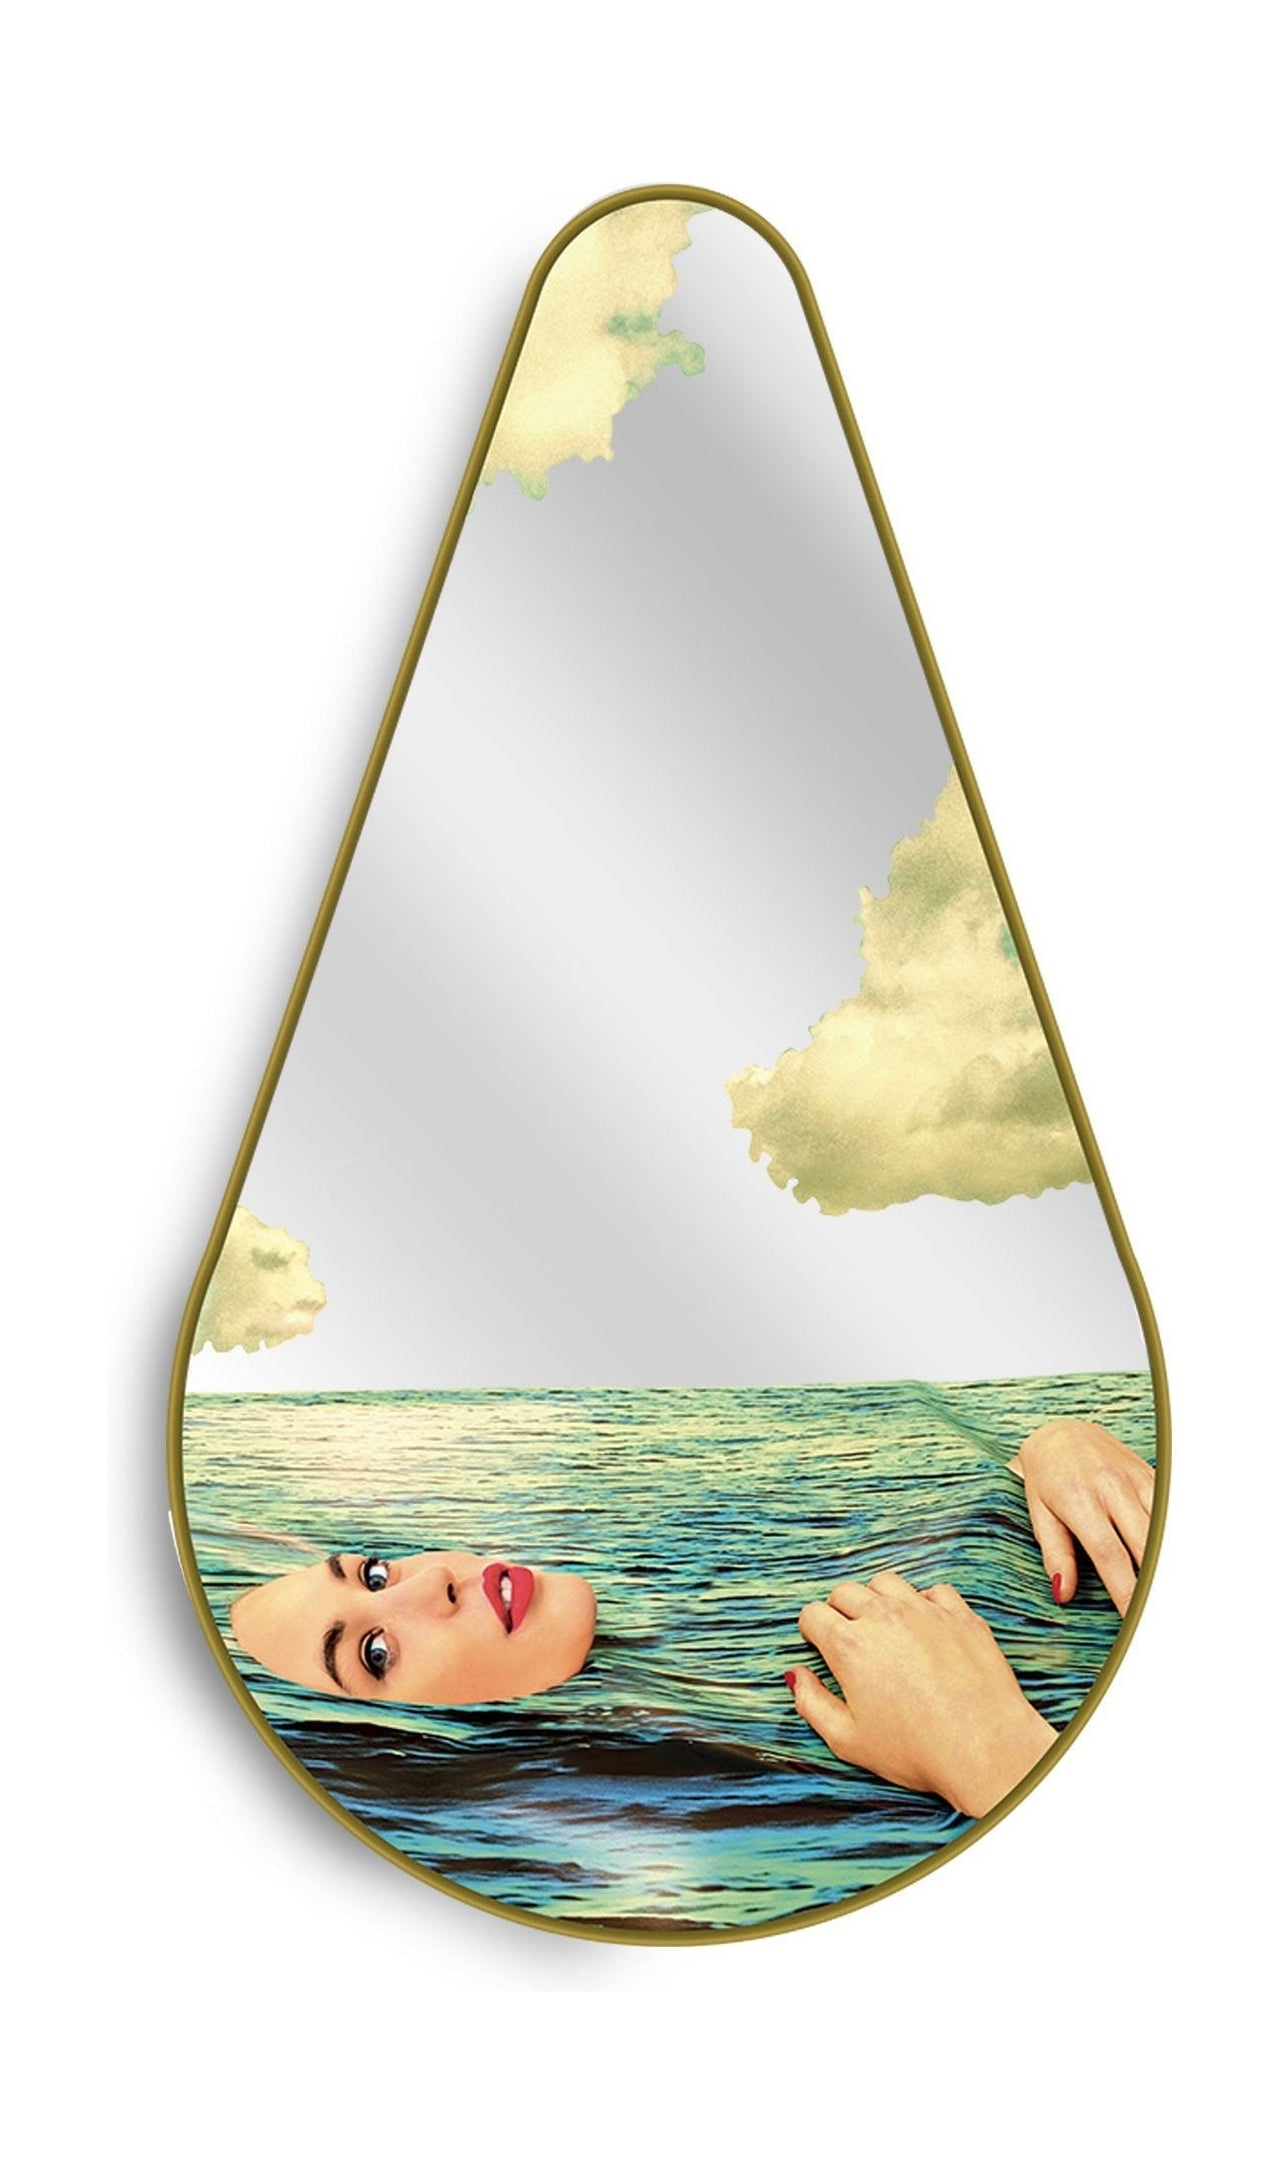 Seletti Toiletpaper Mirror Gold Frame Pear, Seagirl